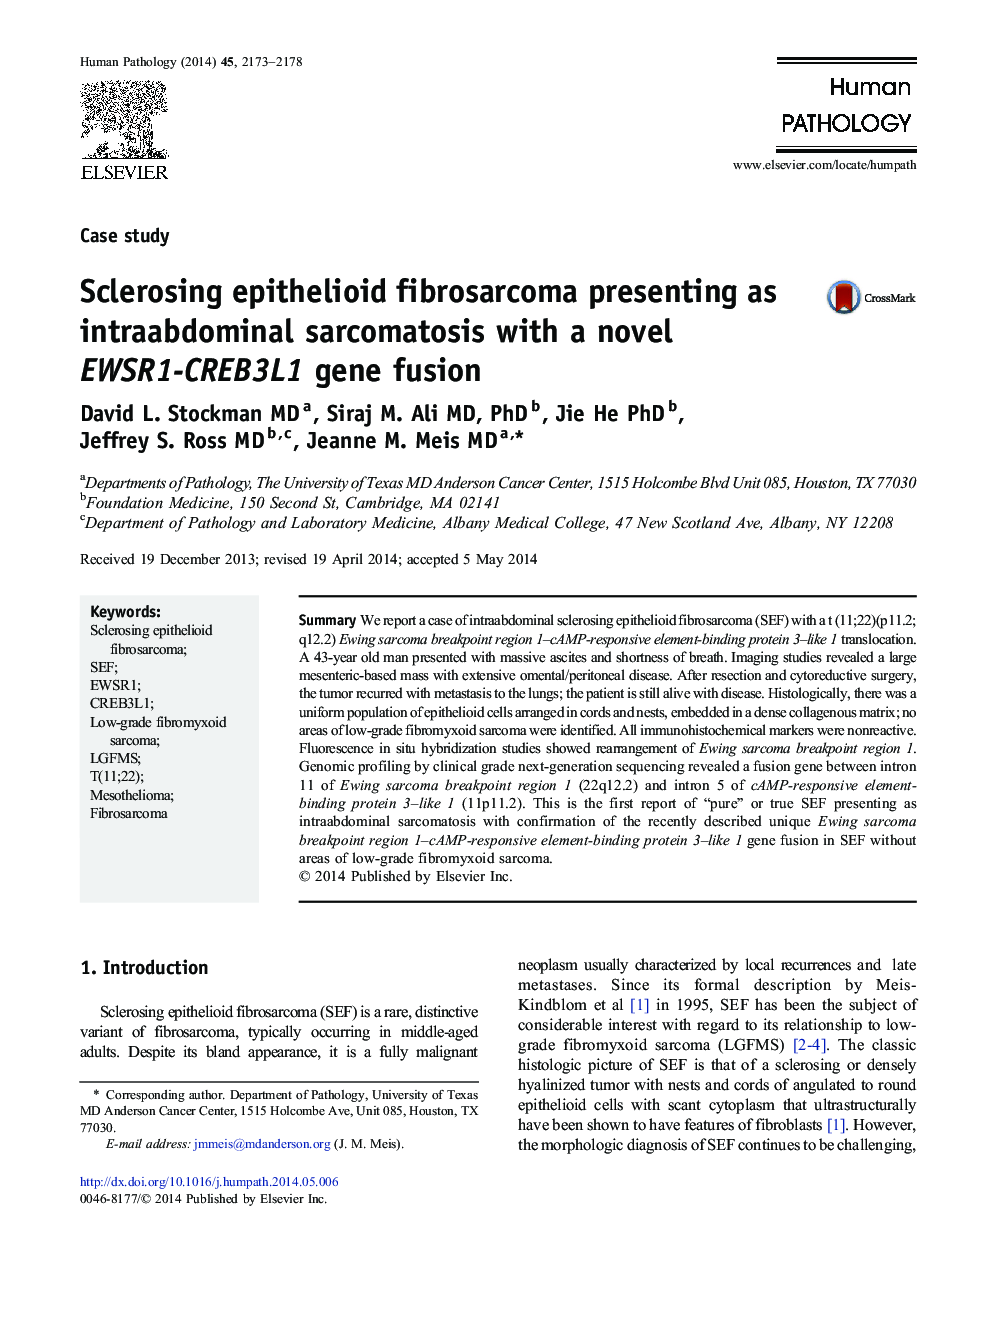 Sclerosing epithelioid fibrosarcoma presenting as intraabdominal sarcomatosis with a novel EWSR1-CREB3L1 gene fusion